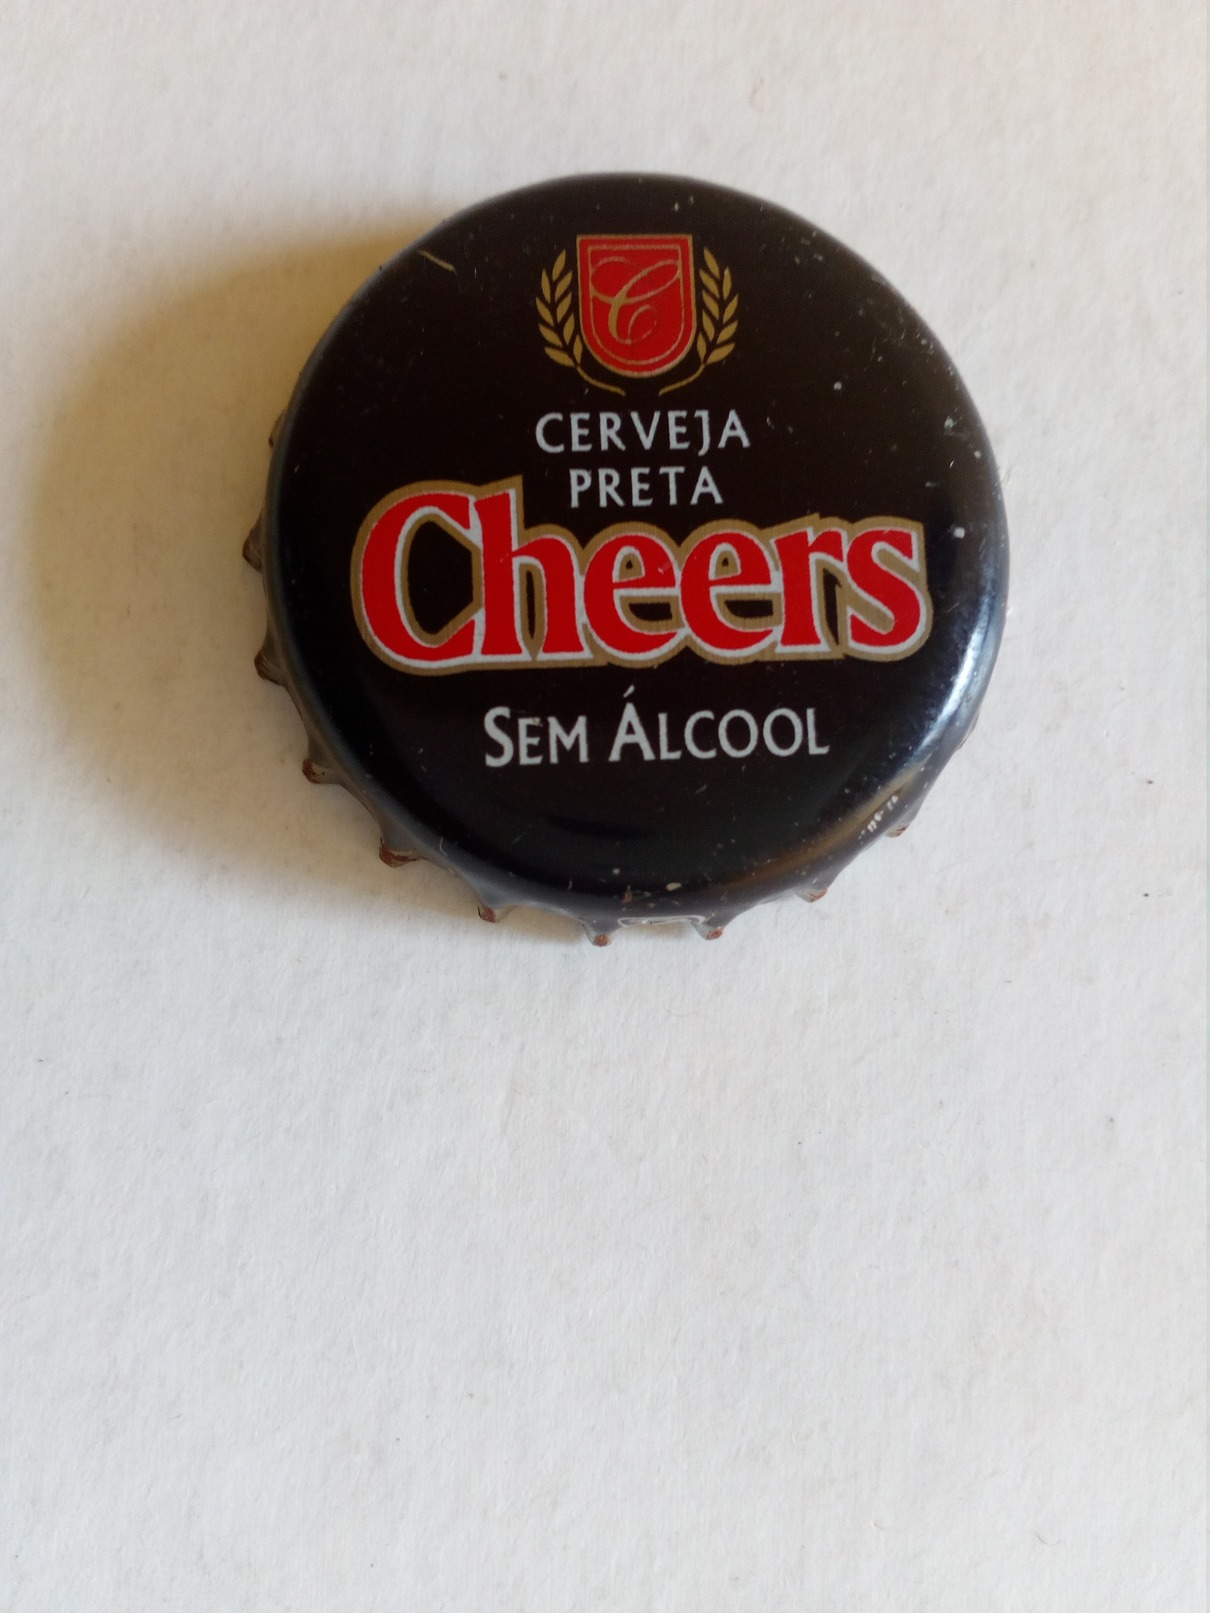 Chapa Cerveja Beer Cheers Sem Alcool. Portugal - Cerveza